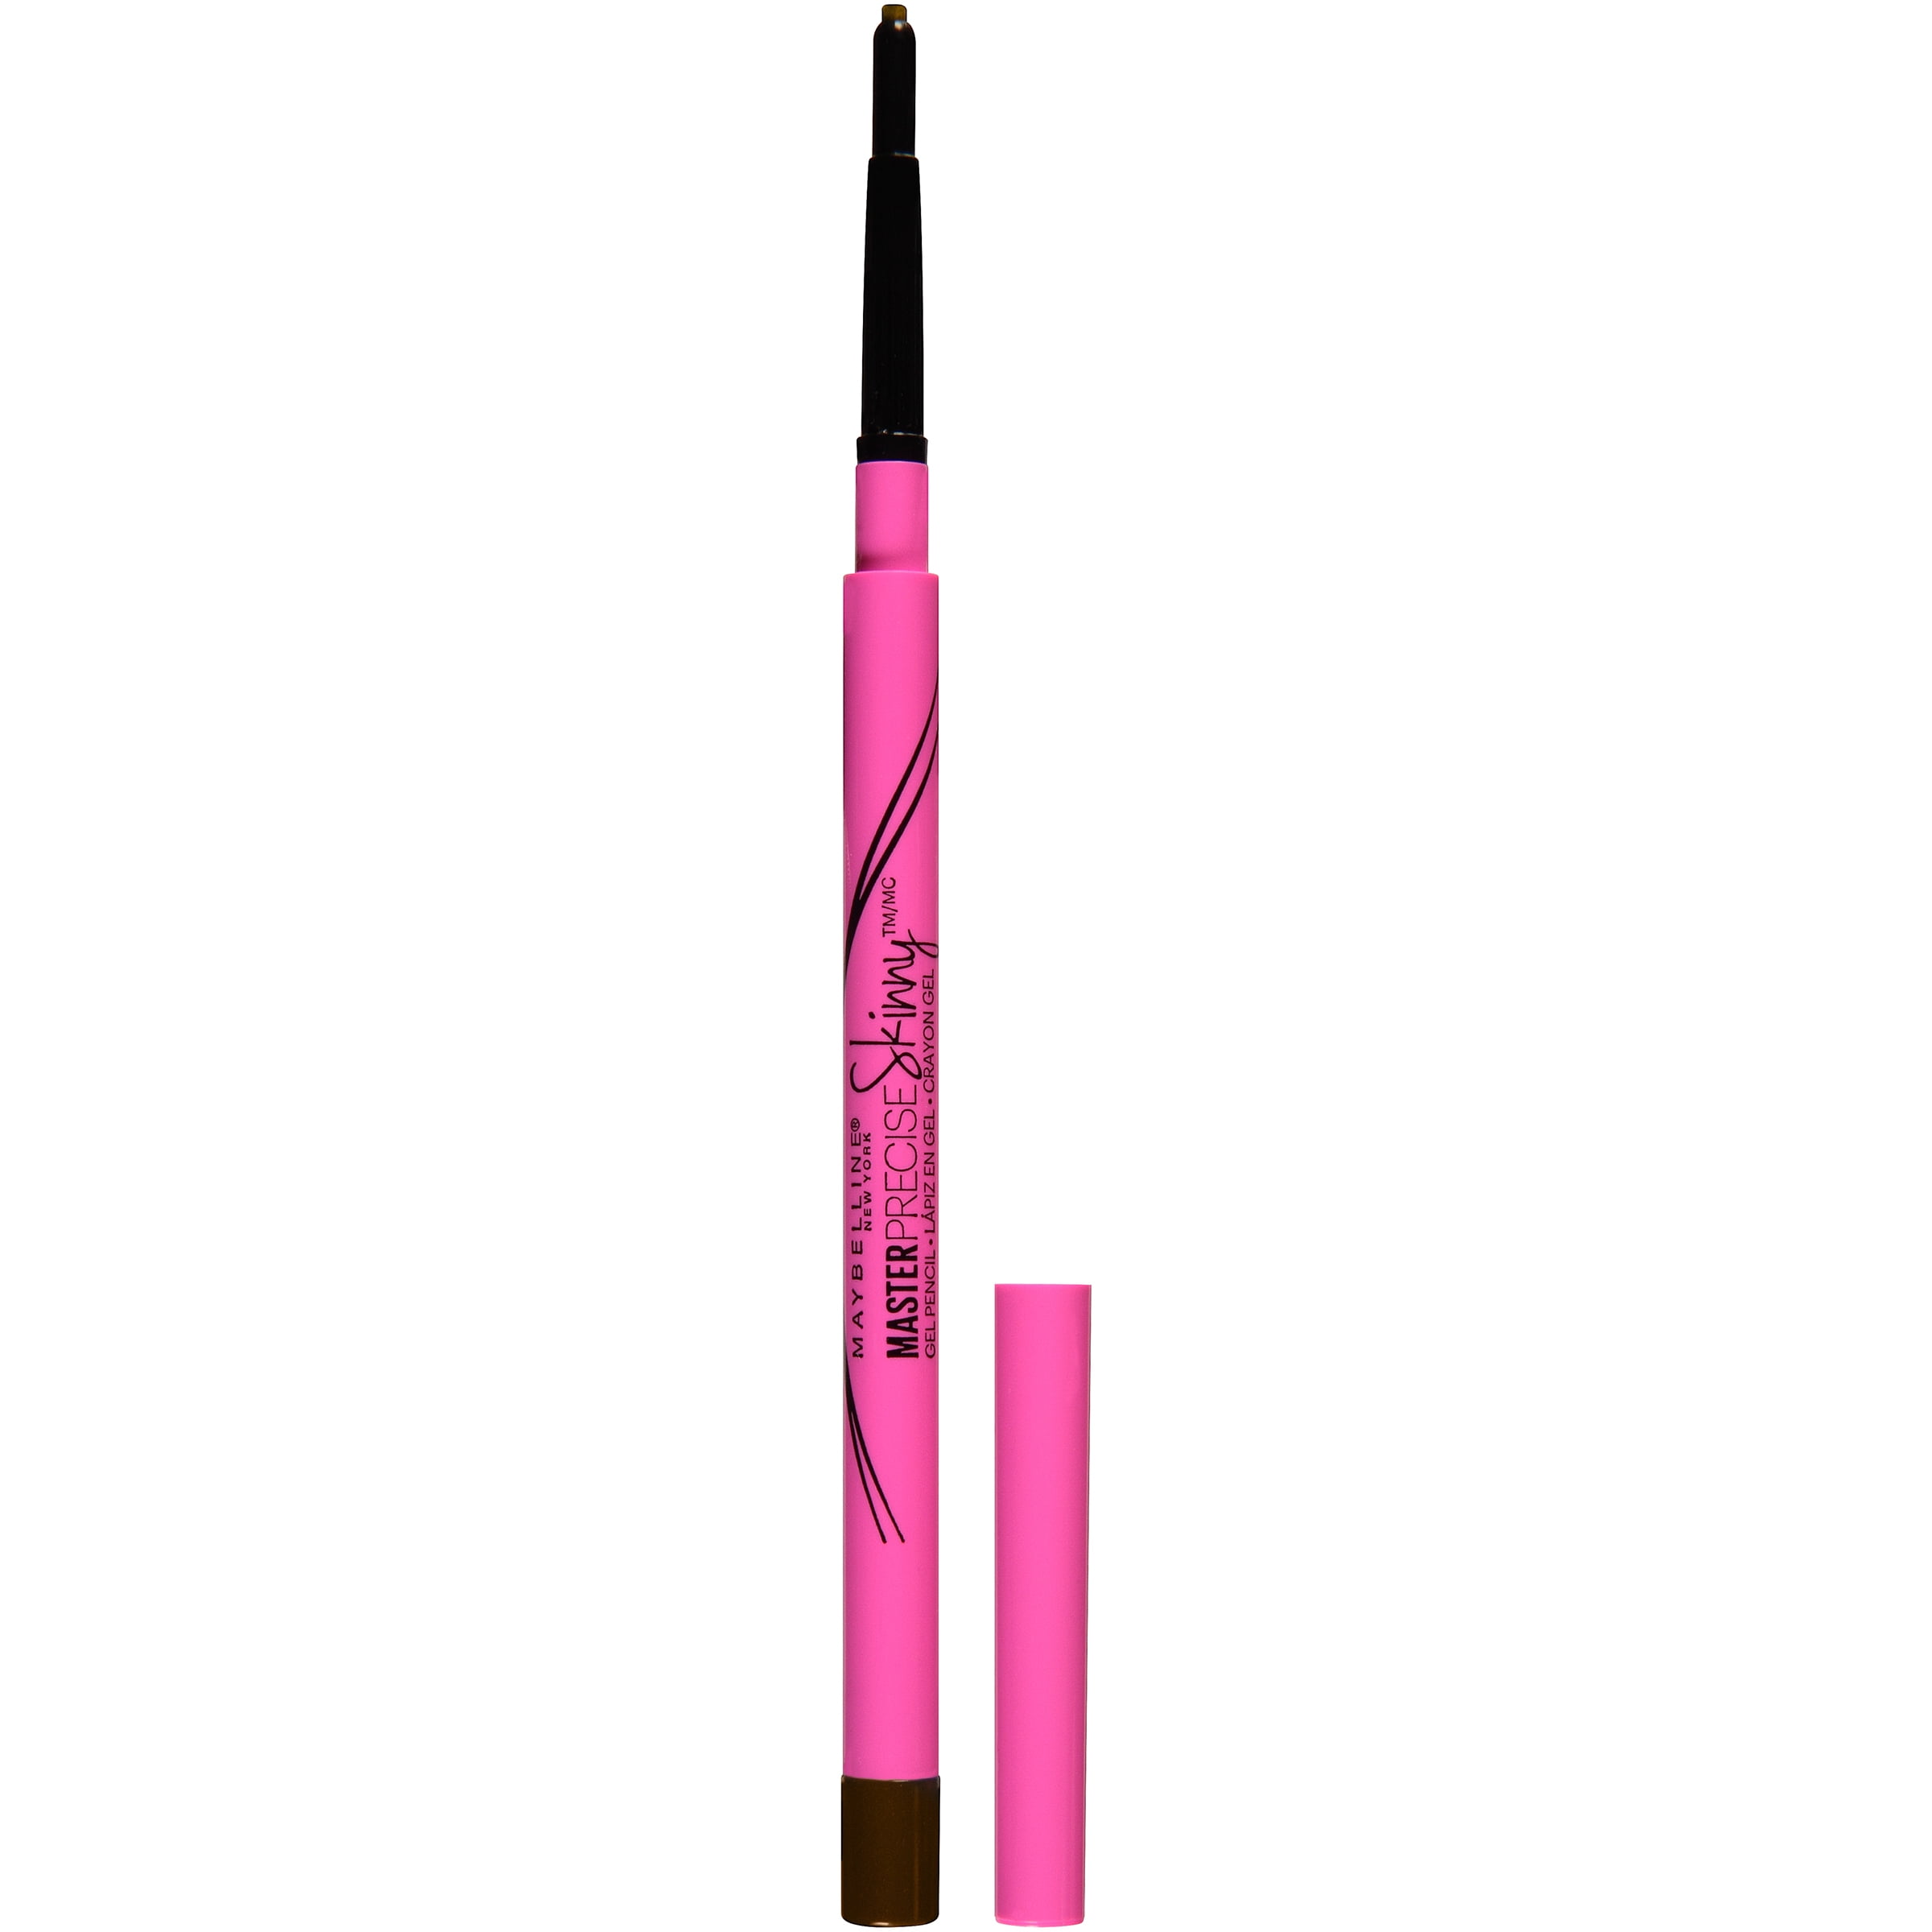 Maybelline Master Precise Skinny Gel Eyeliner Pencil, Sharp Brown